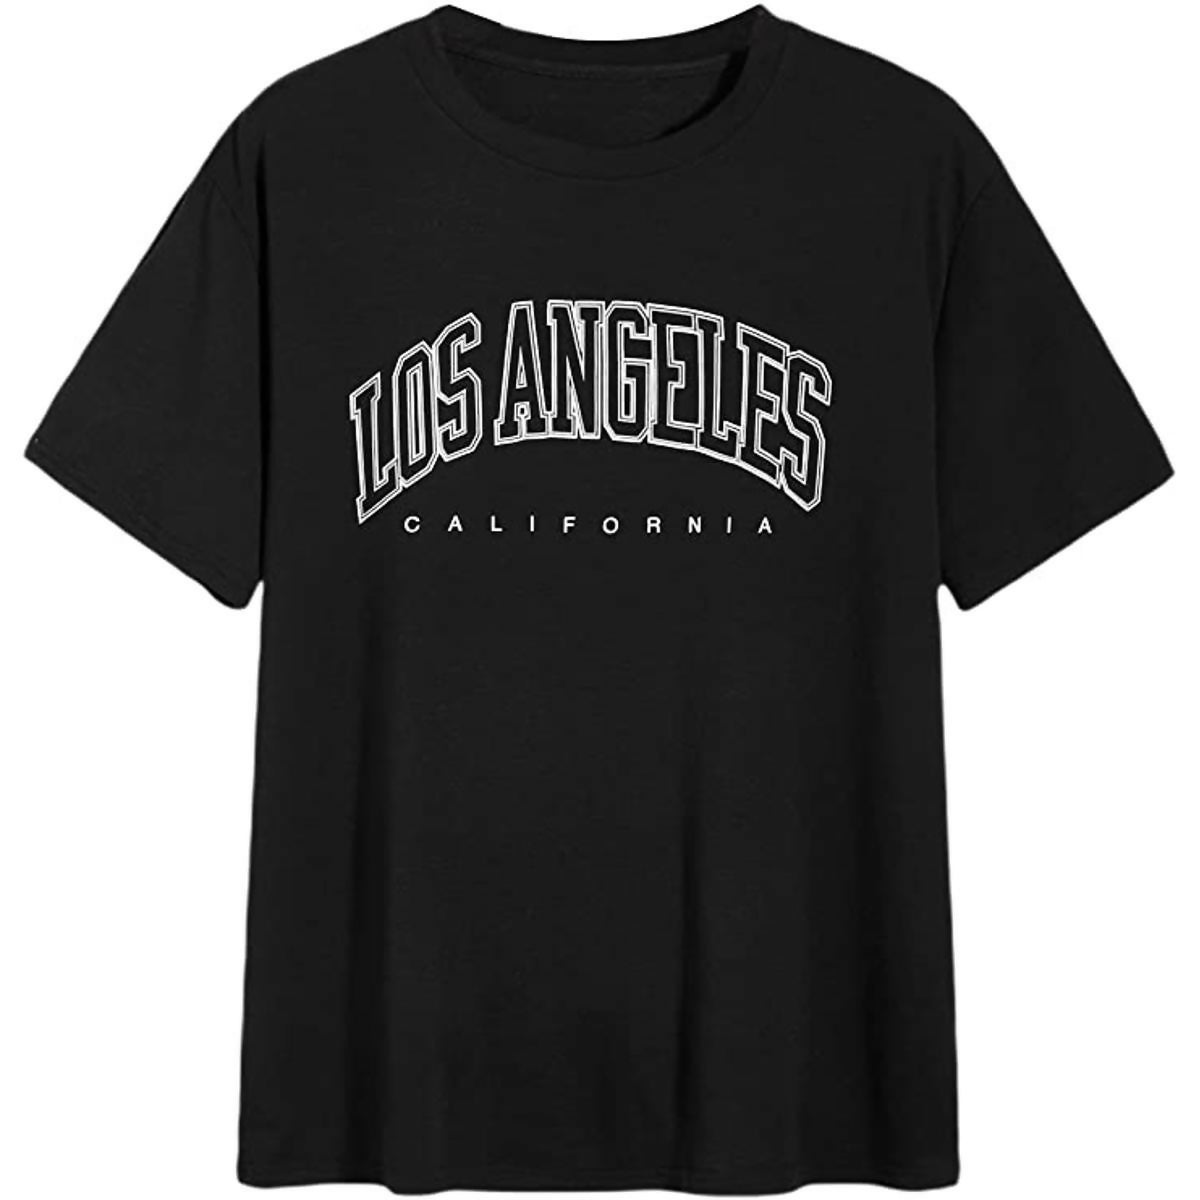 Khanani's Cotton LA Black tshirt for men - ValueBox